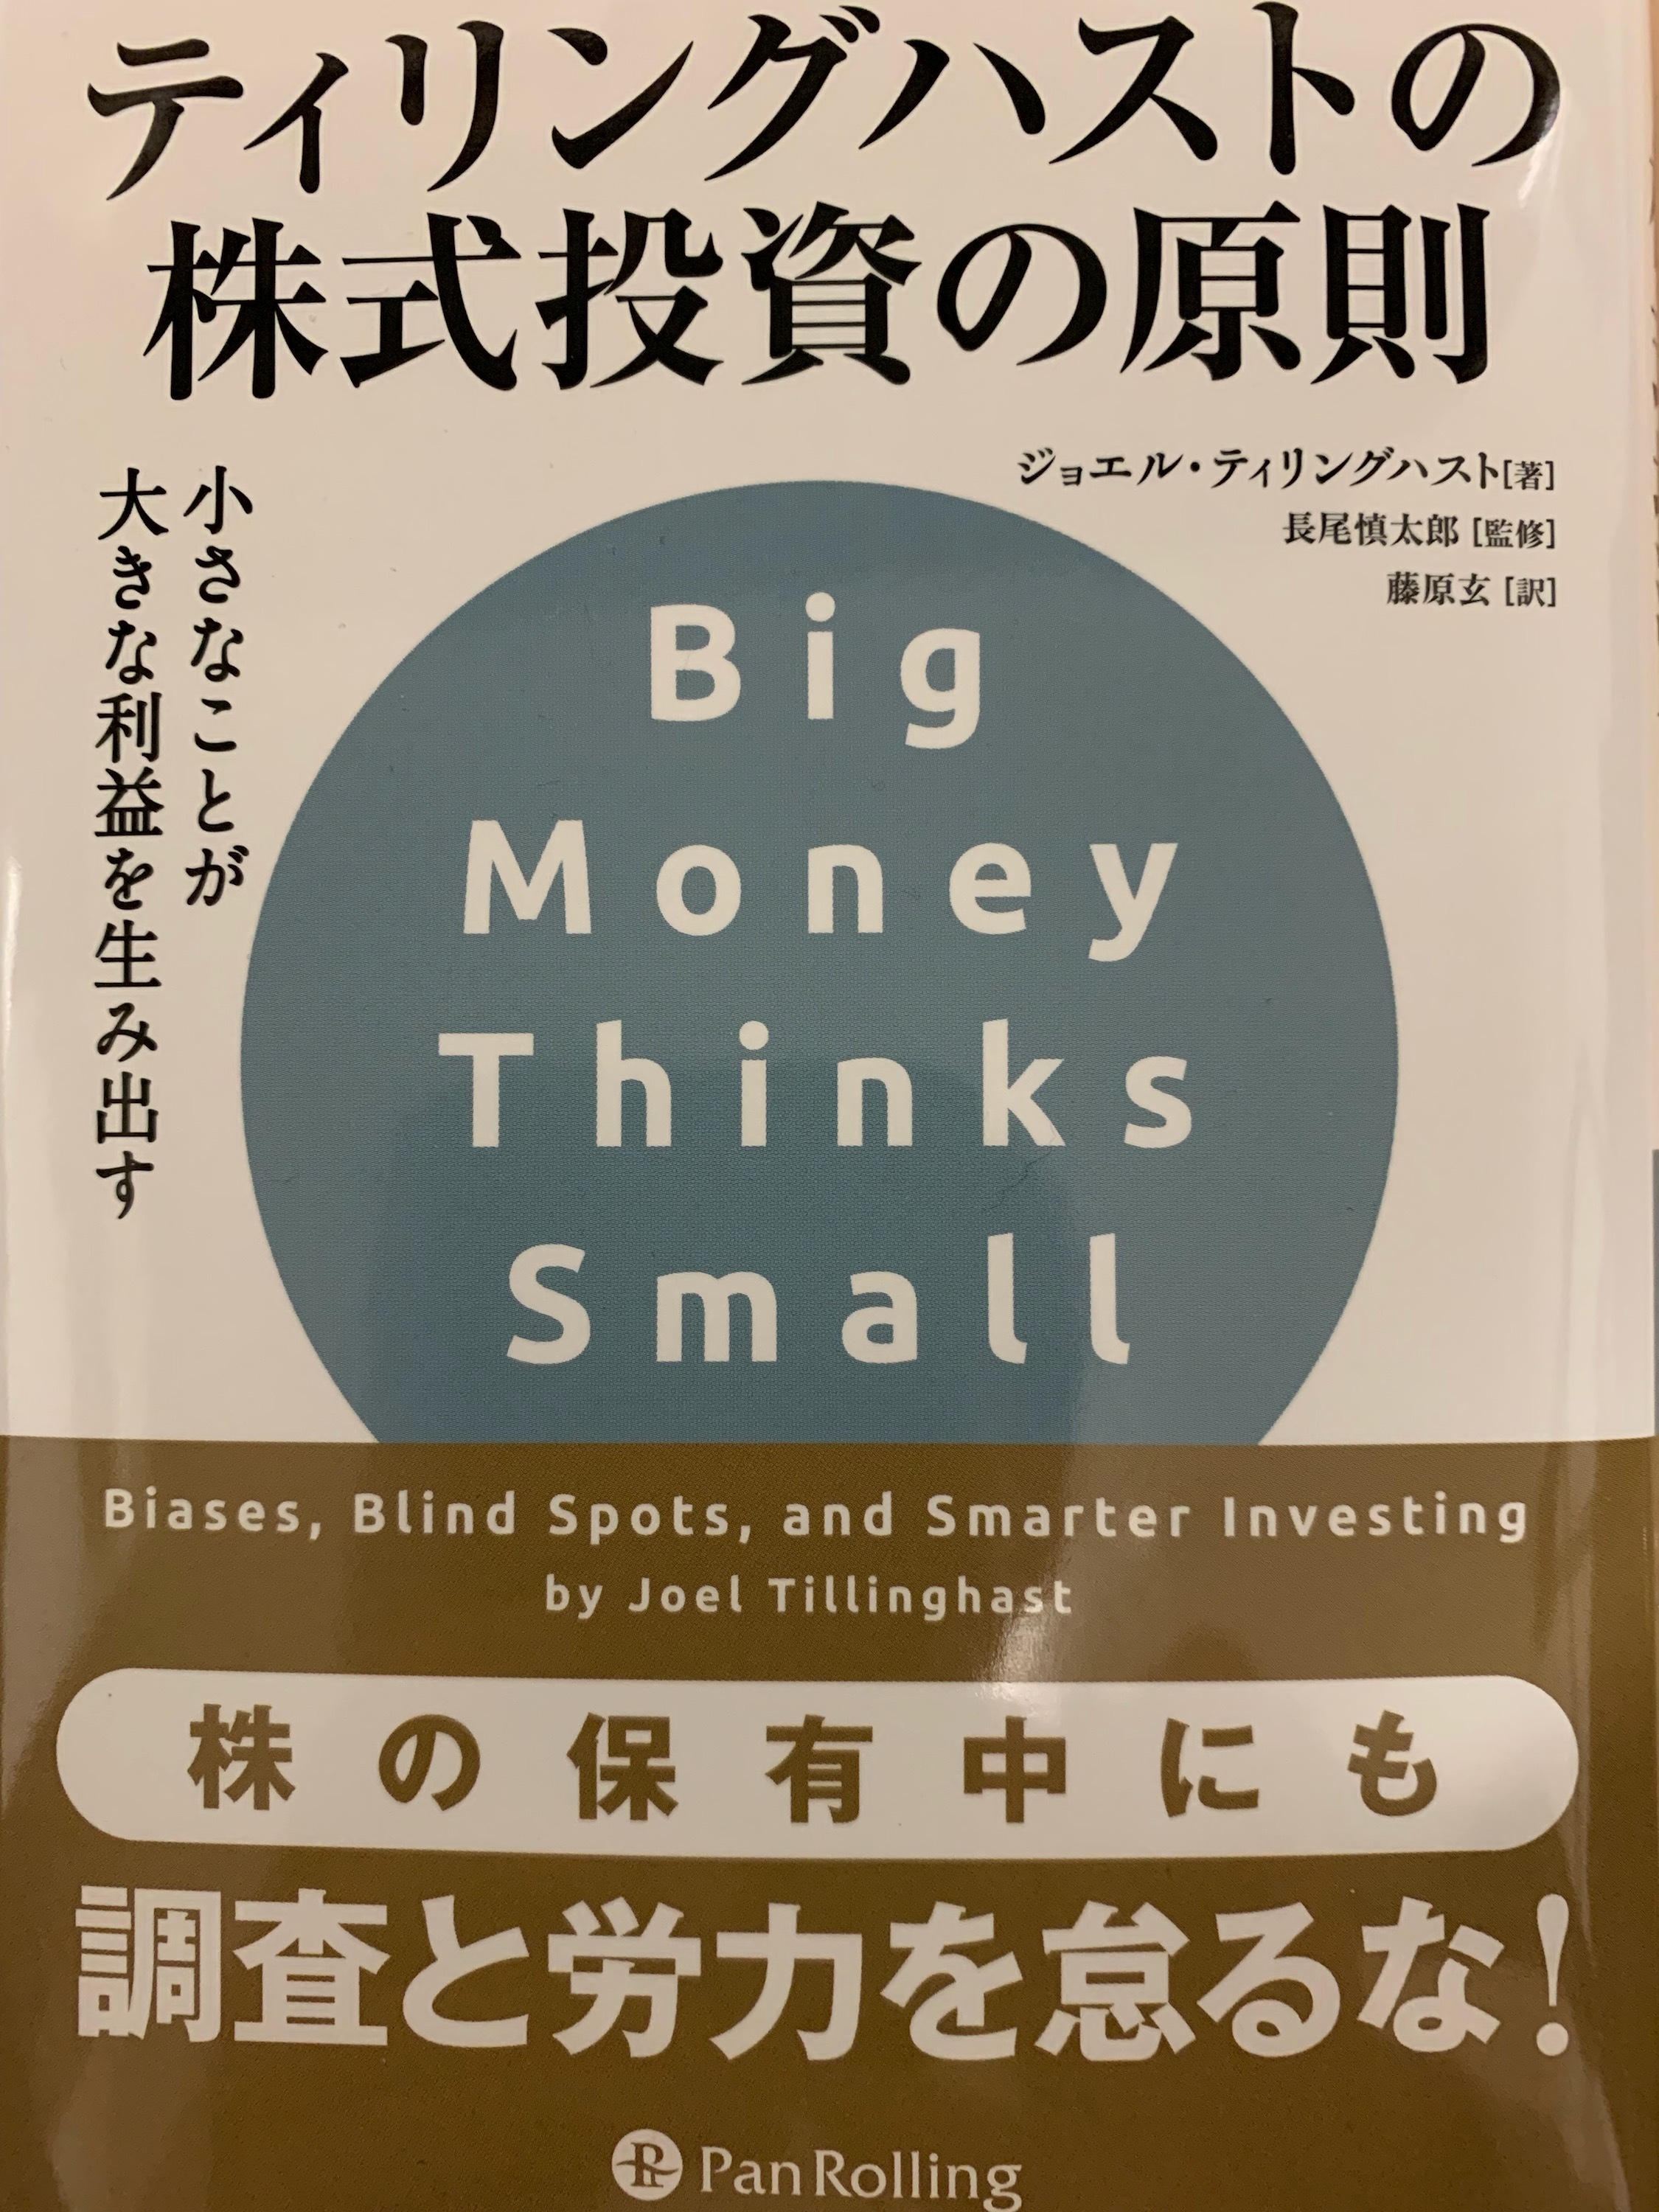 Big-money-thinks-small-tillinghast-20190208.jpg